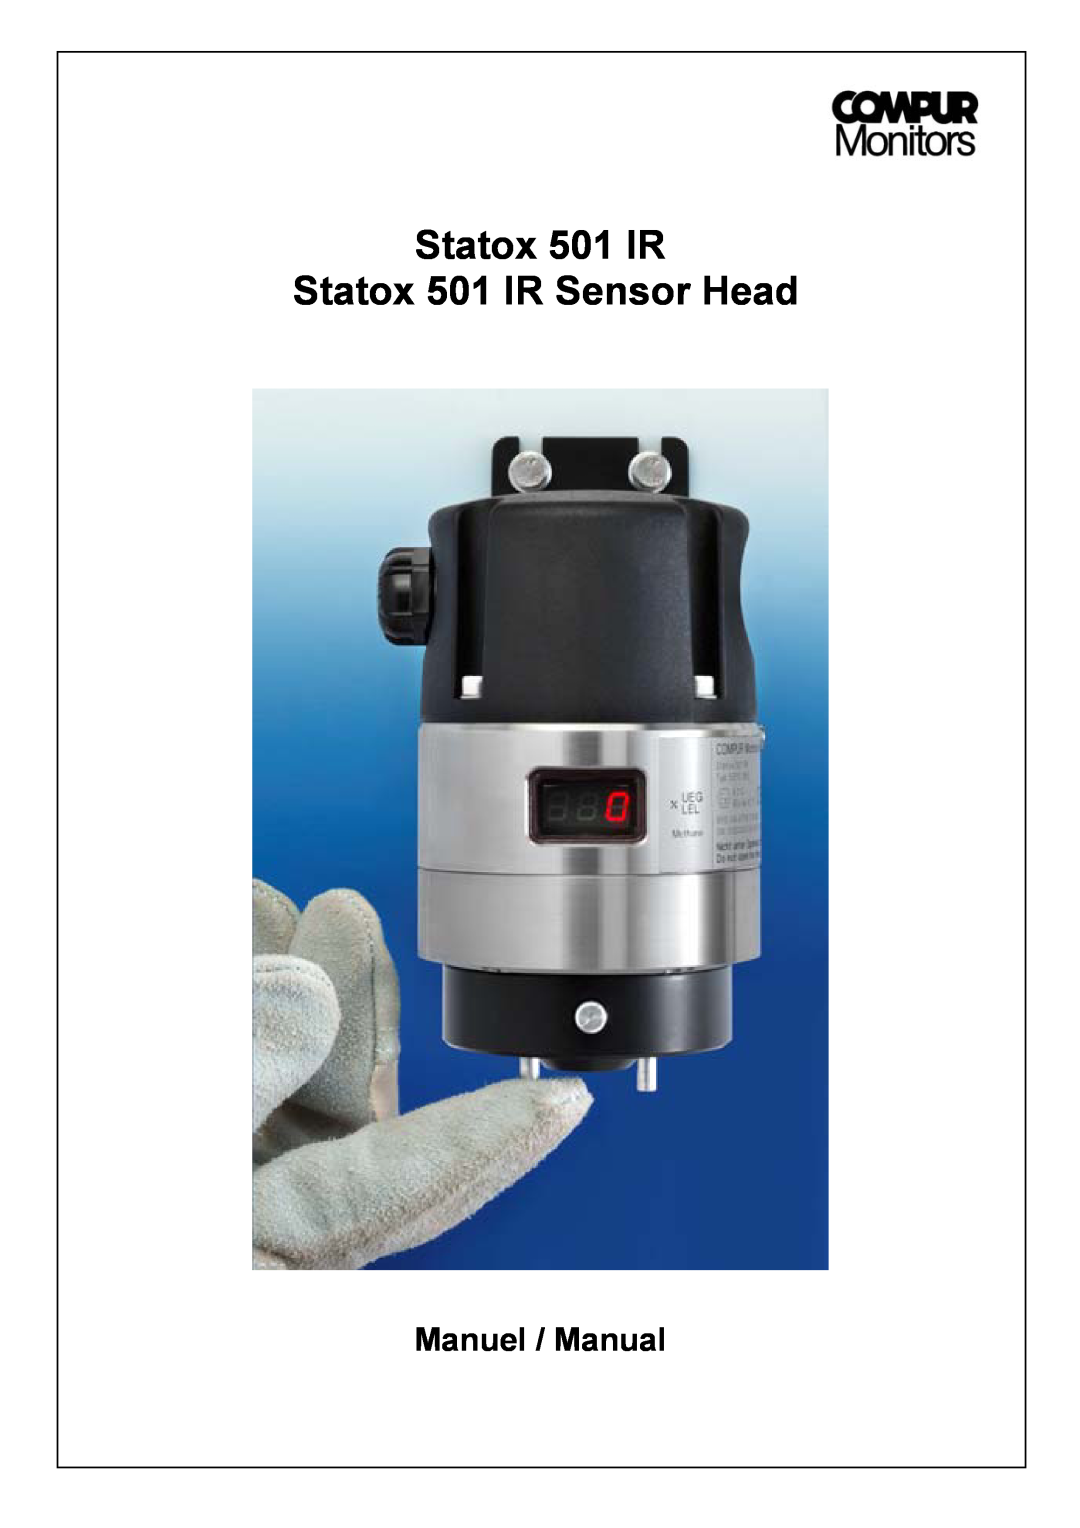 Compur manual Statox 501 IR Statox 501 IR Sensor Head, Manuel / Manual 